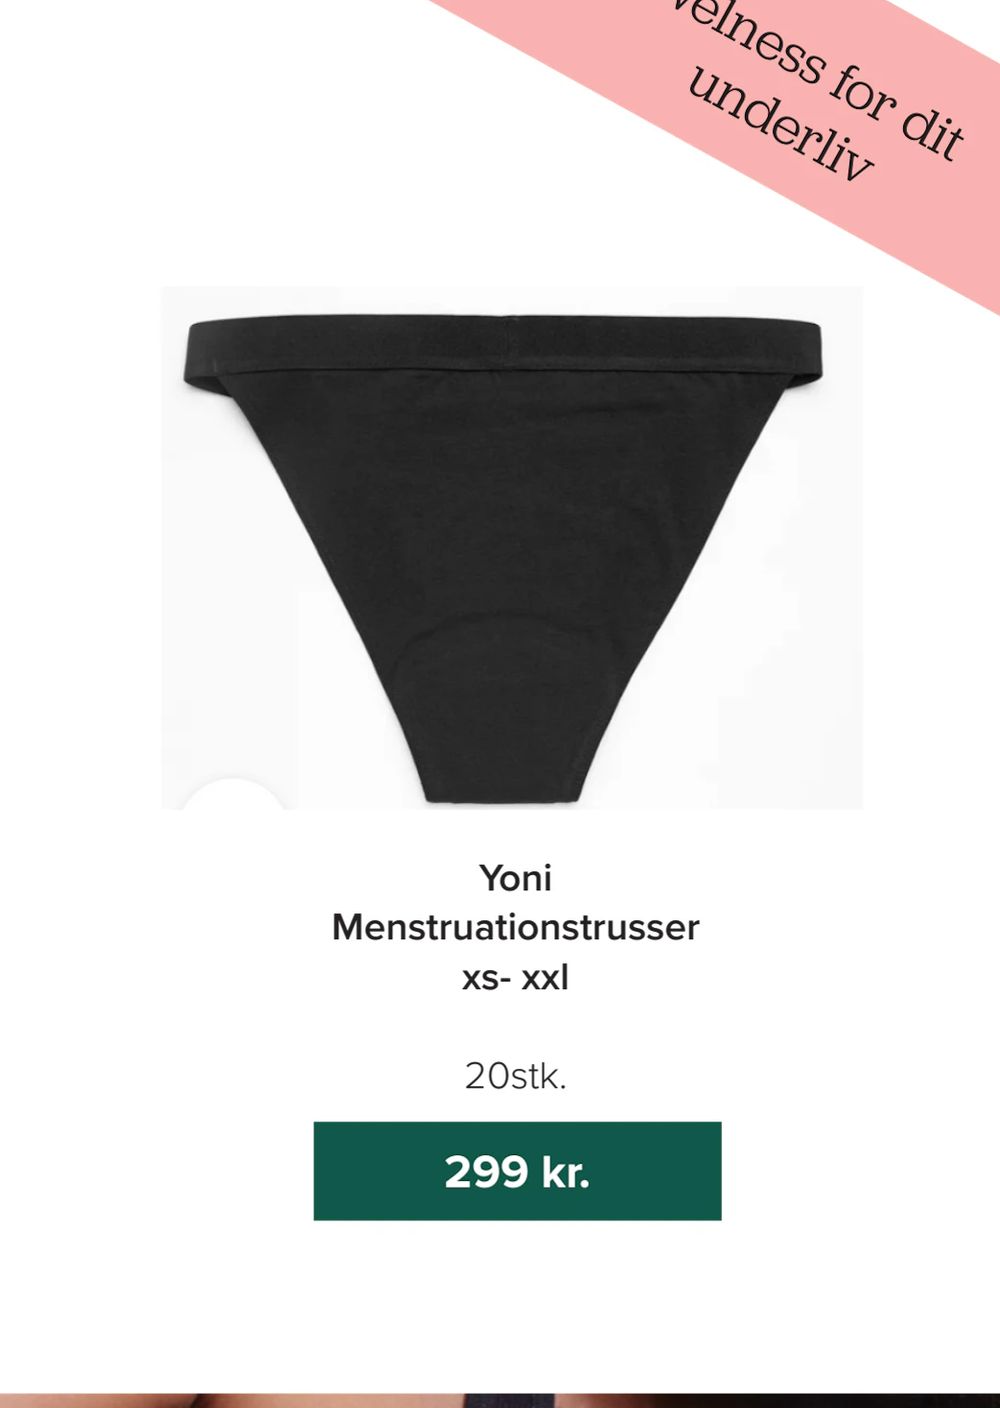 Tilbud på Yoni Menstruationstrusser xs- xxl fra Helsemin til 299 kr.